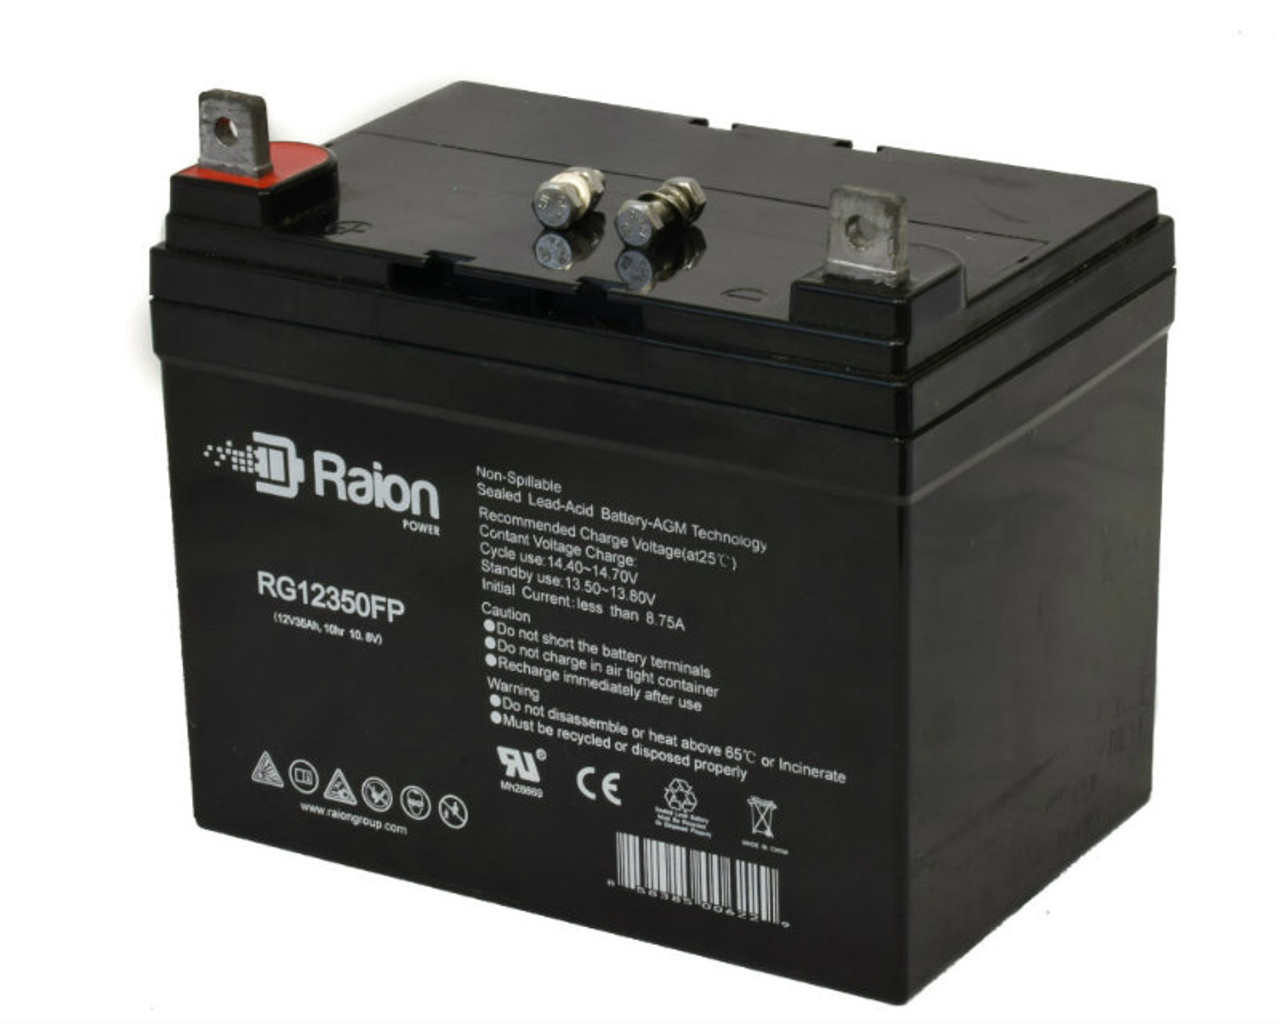 Raion Power Replacement 12V 35Ah Battery for Kubota B4200 - 1 Pack